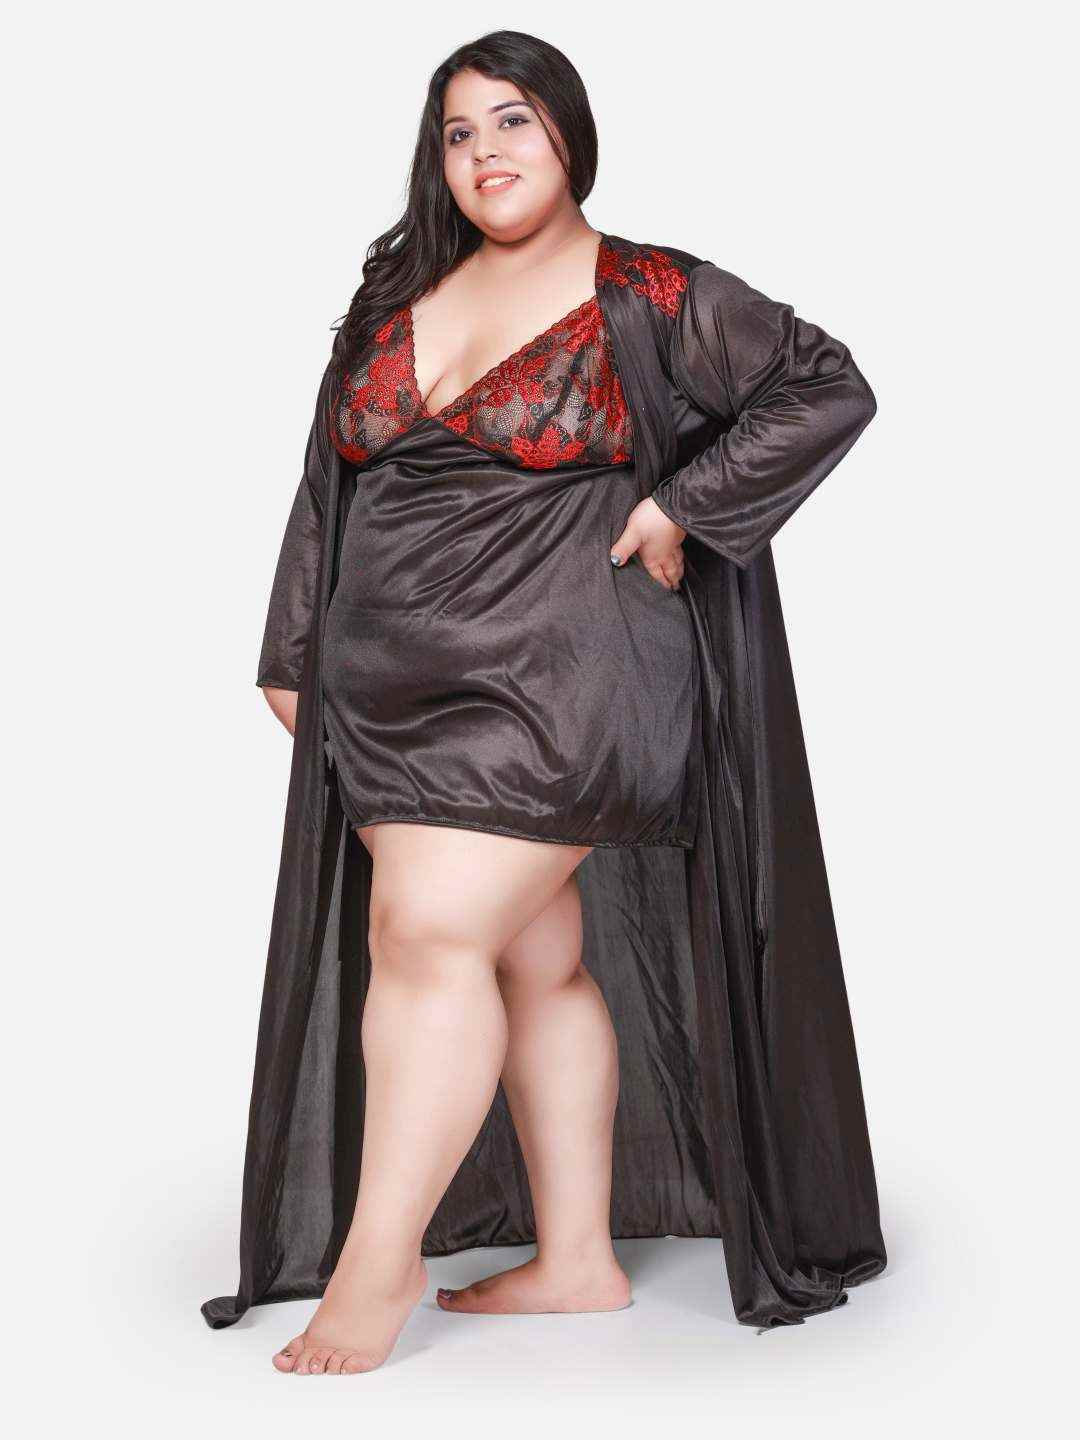 Hot Two Piece Black Babydoll Night Dress for Women 301Kg